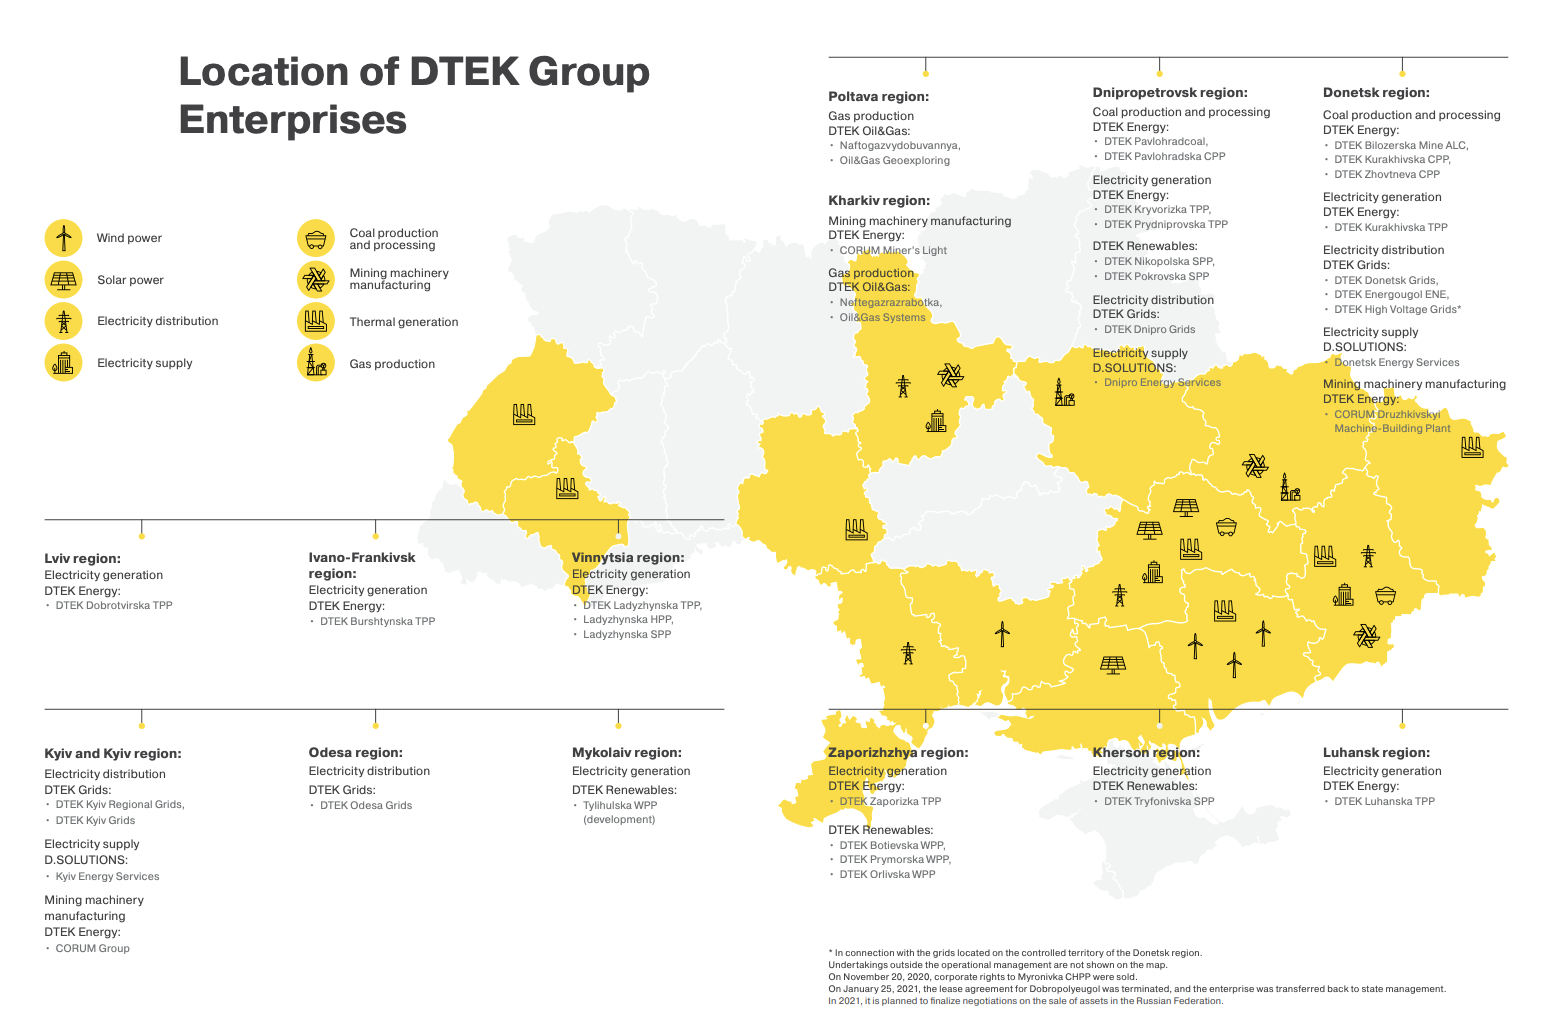 Location of DTEK Group Enterprises